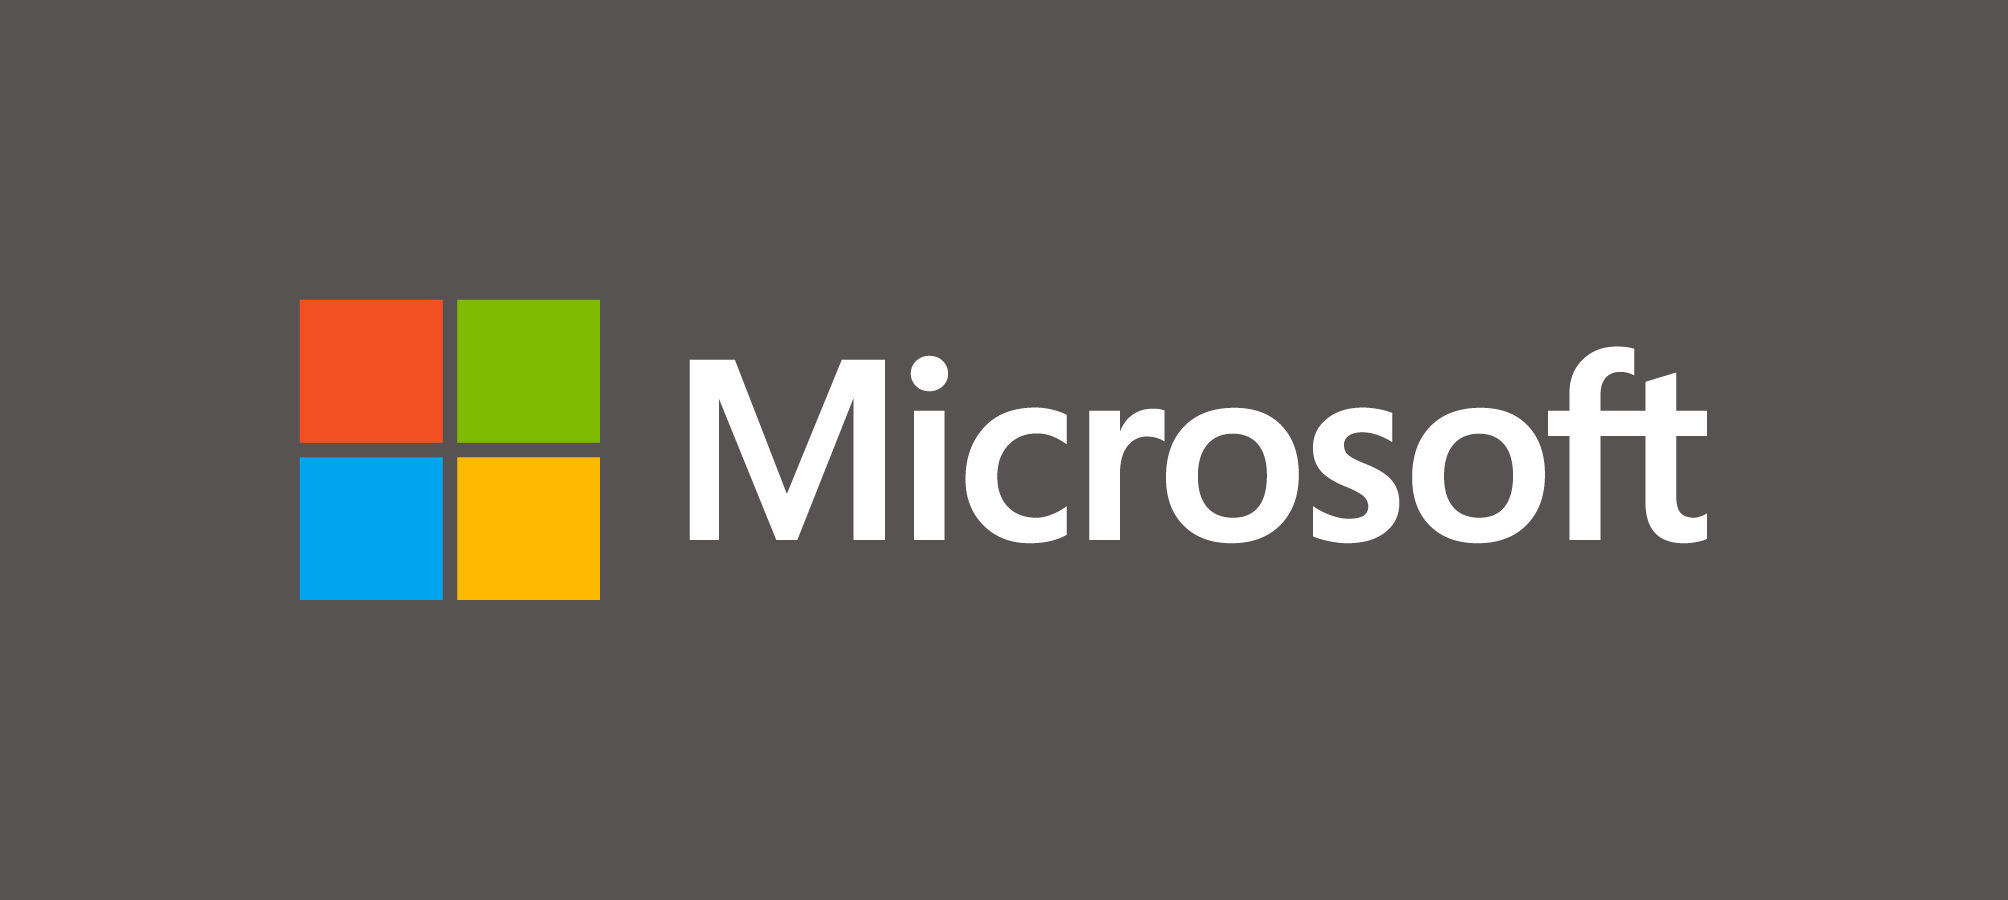 Microsoft Logo PNG - 176375